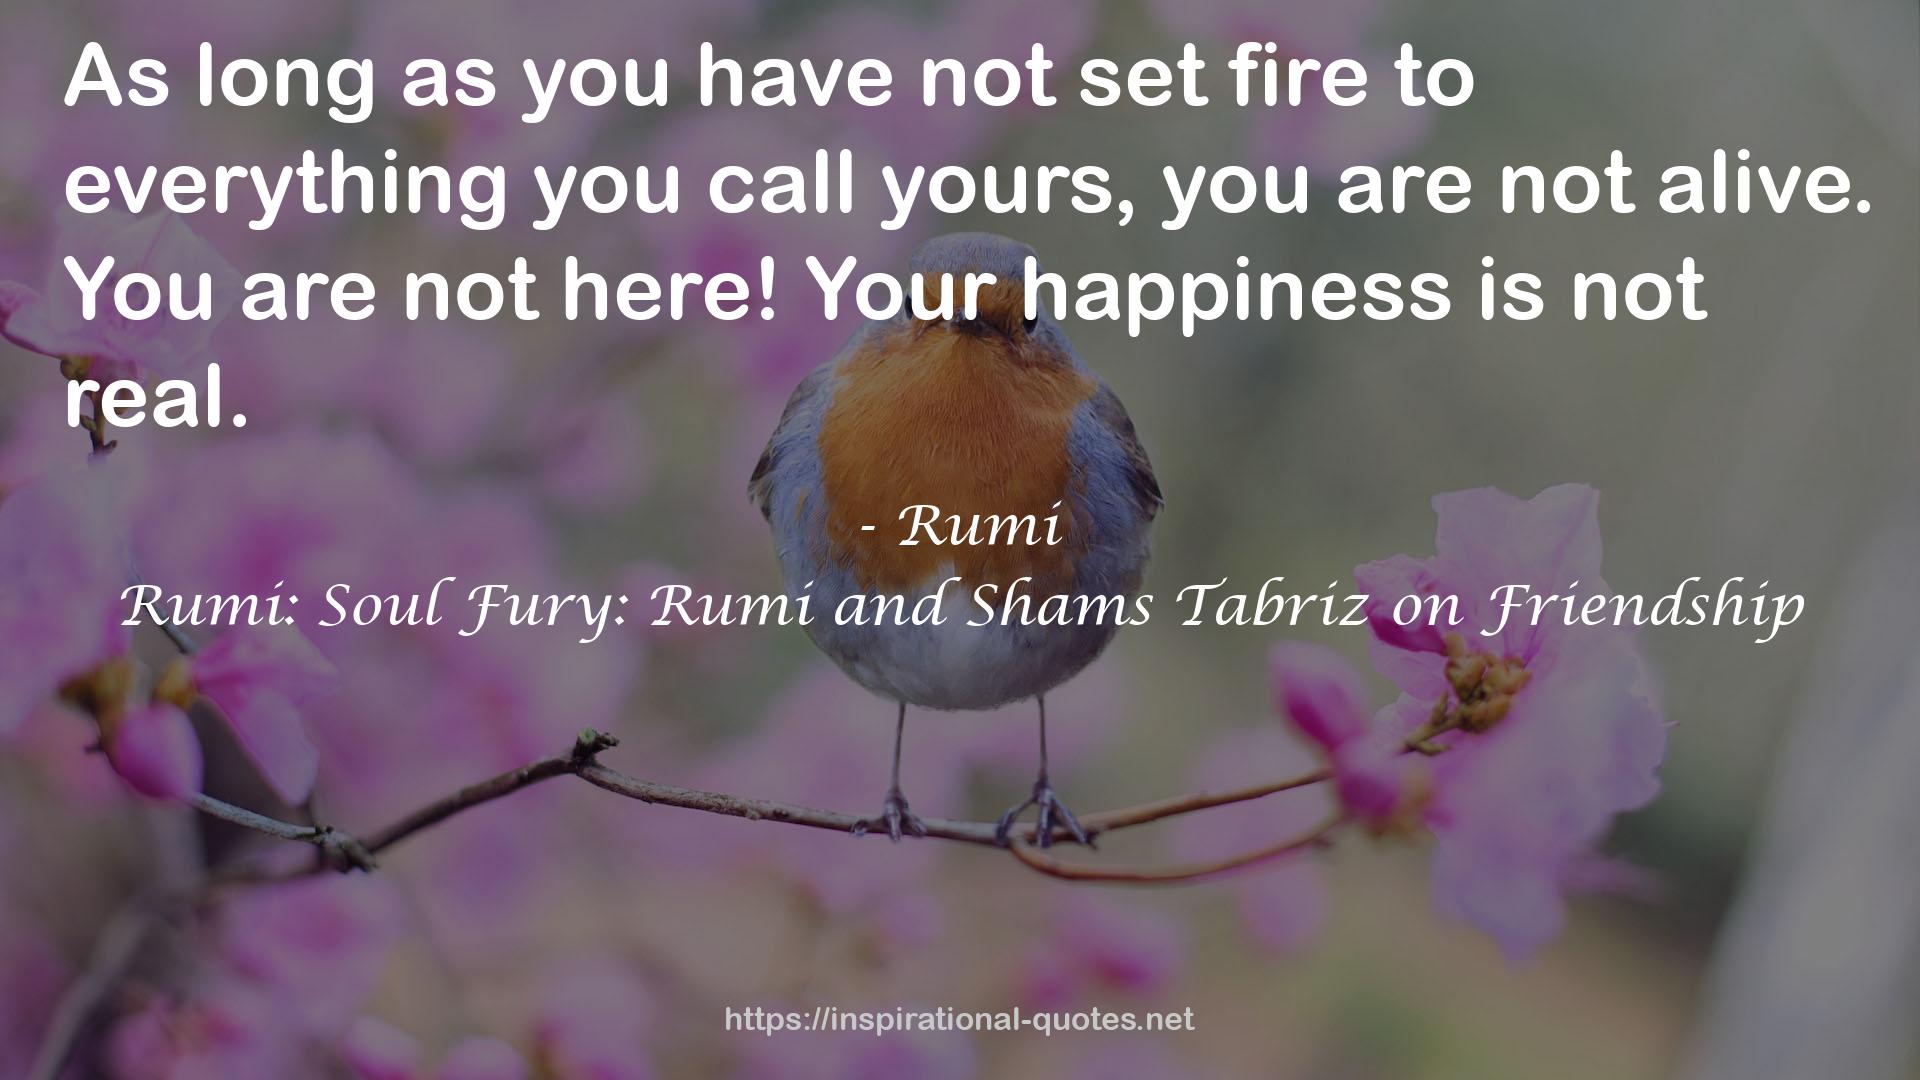 Rumi: Soul Fury: Rumi and Shams Tabriz on Friendship QUOTES